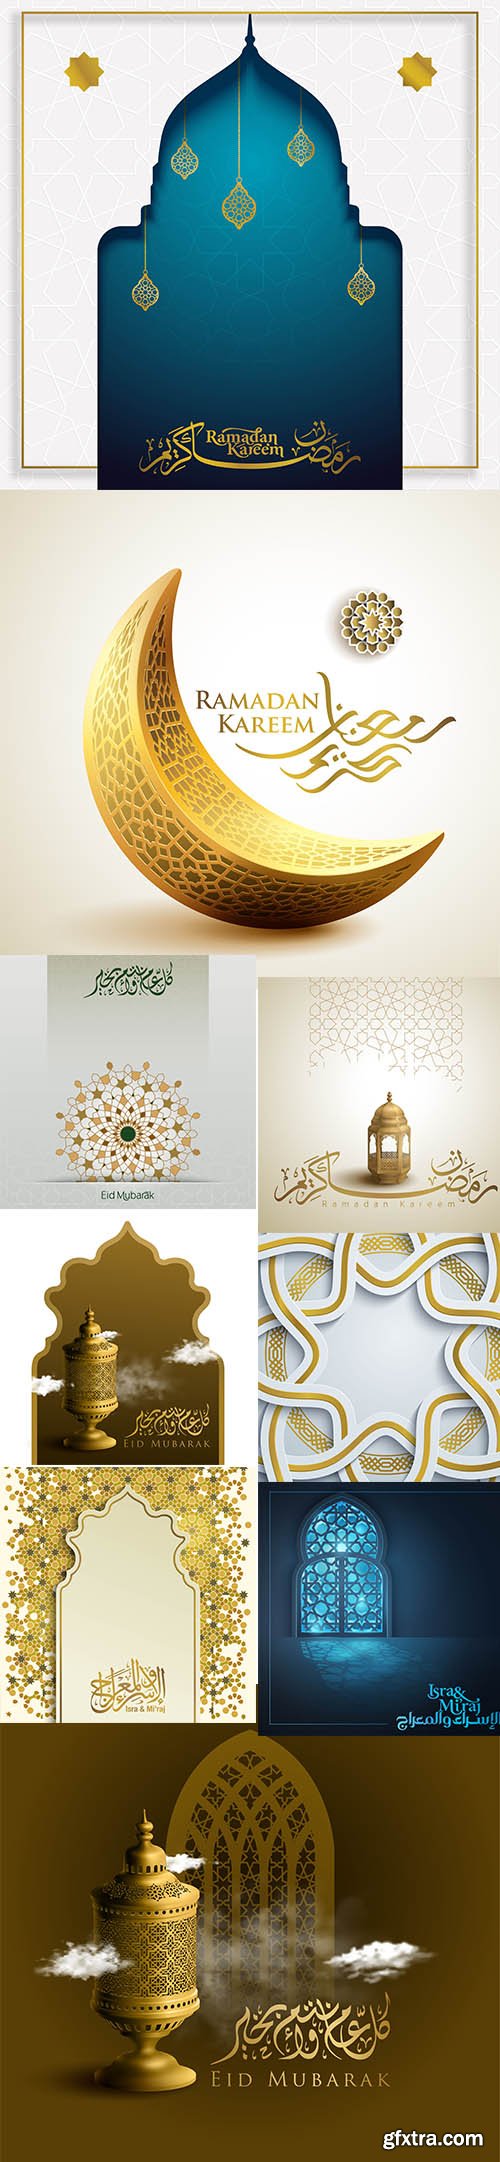 Arabic Calligraphy Illustrations